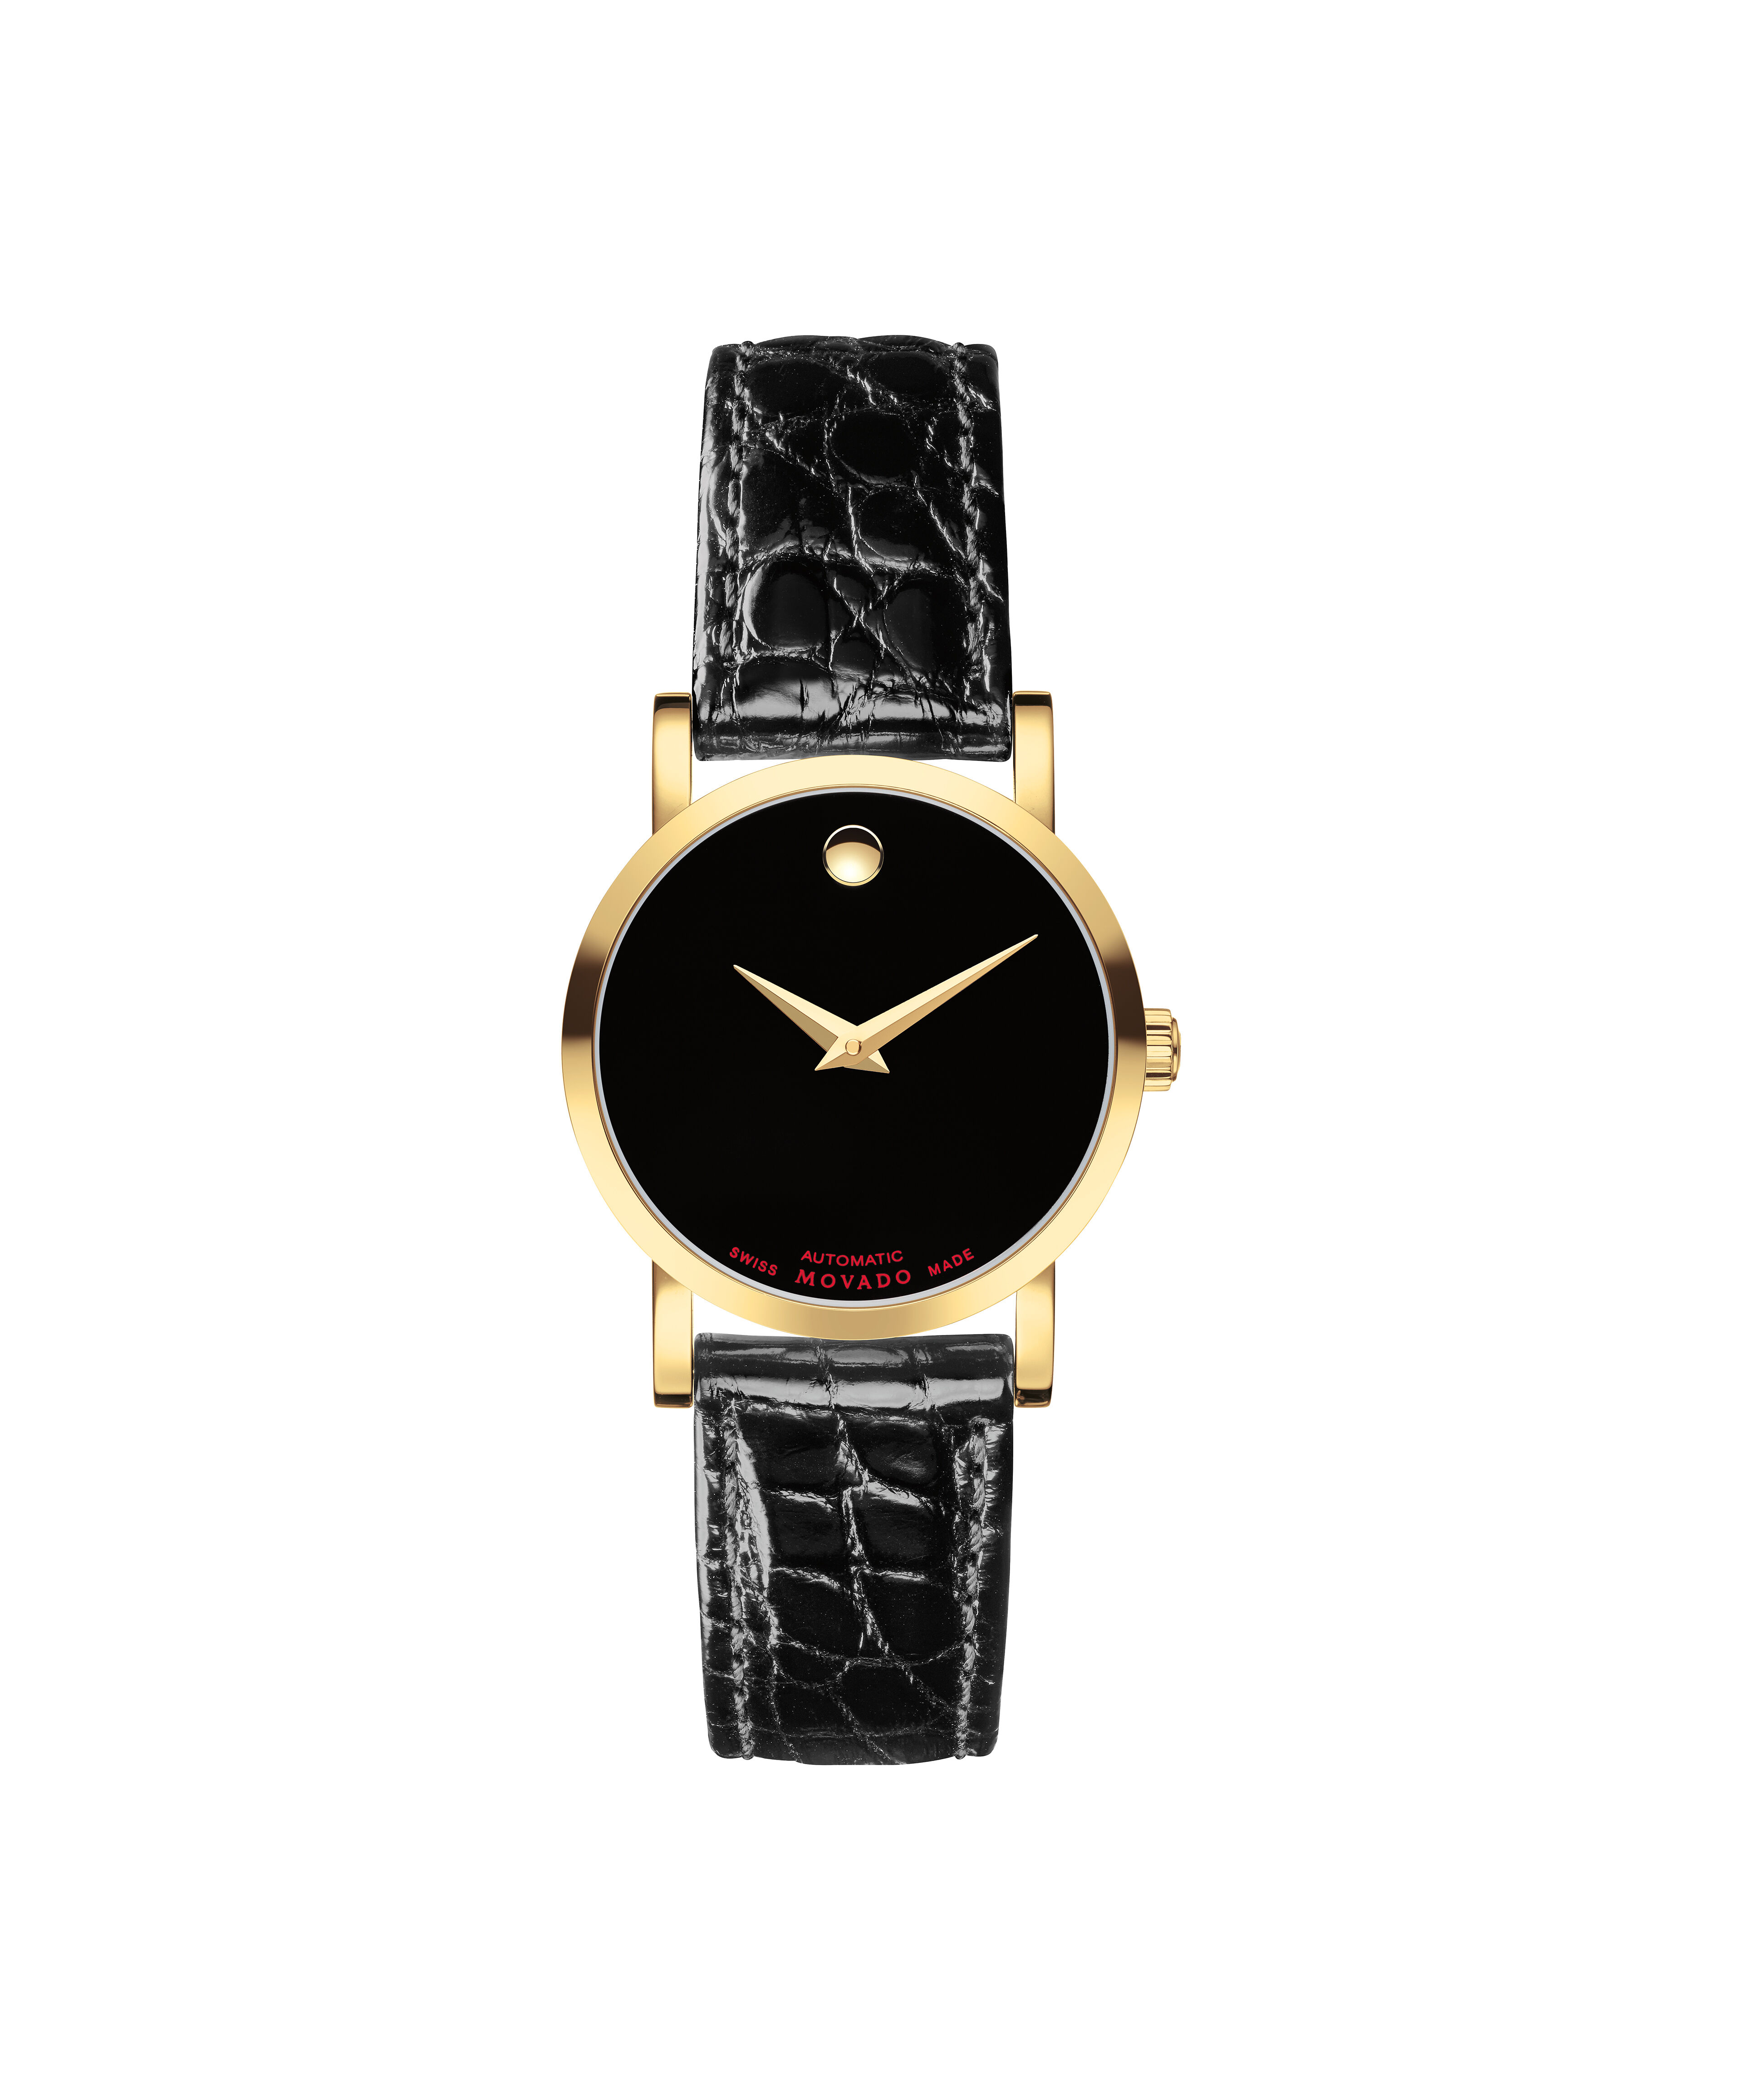 Movado cal. 220 bumper automatic 14k gold vintage wristwatch